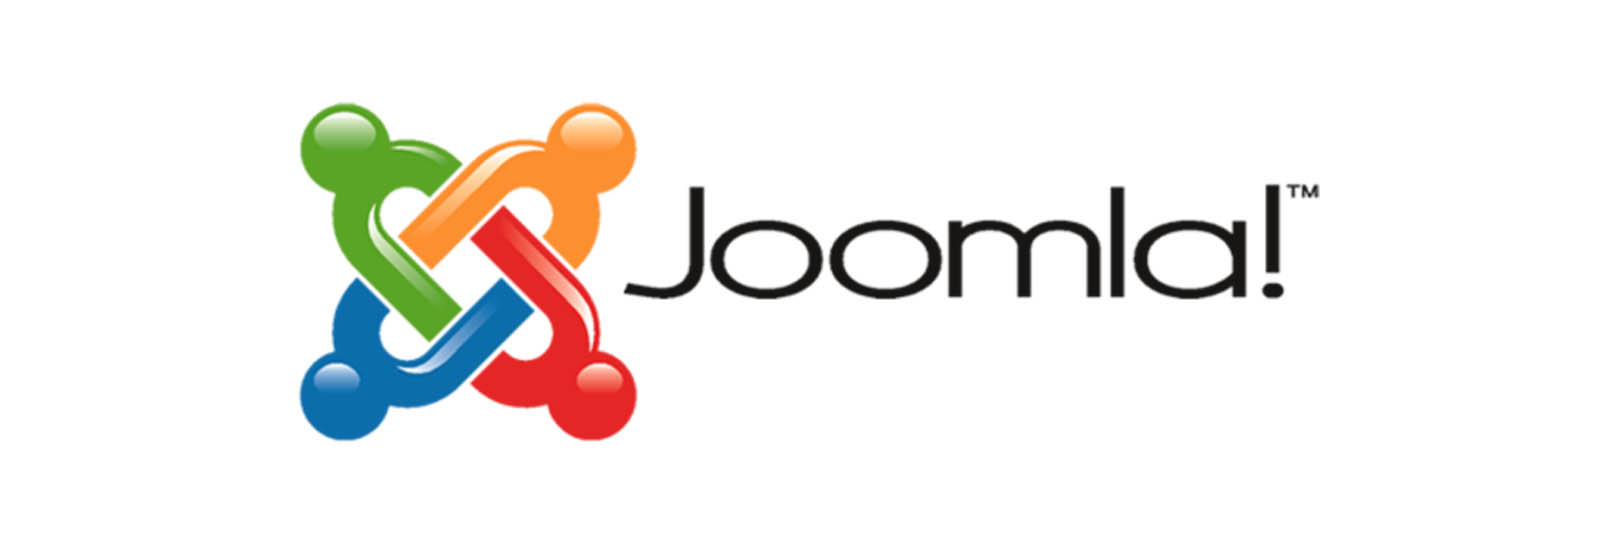 How can I block IP addresses in Joomla?